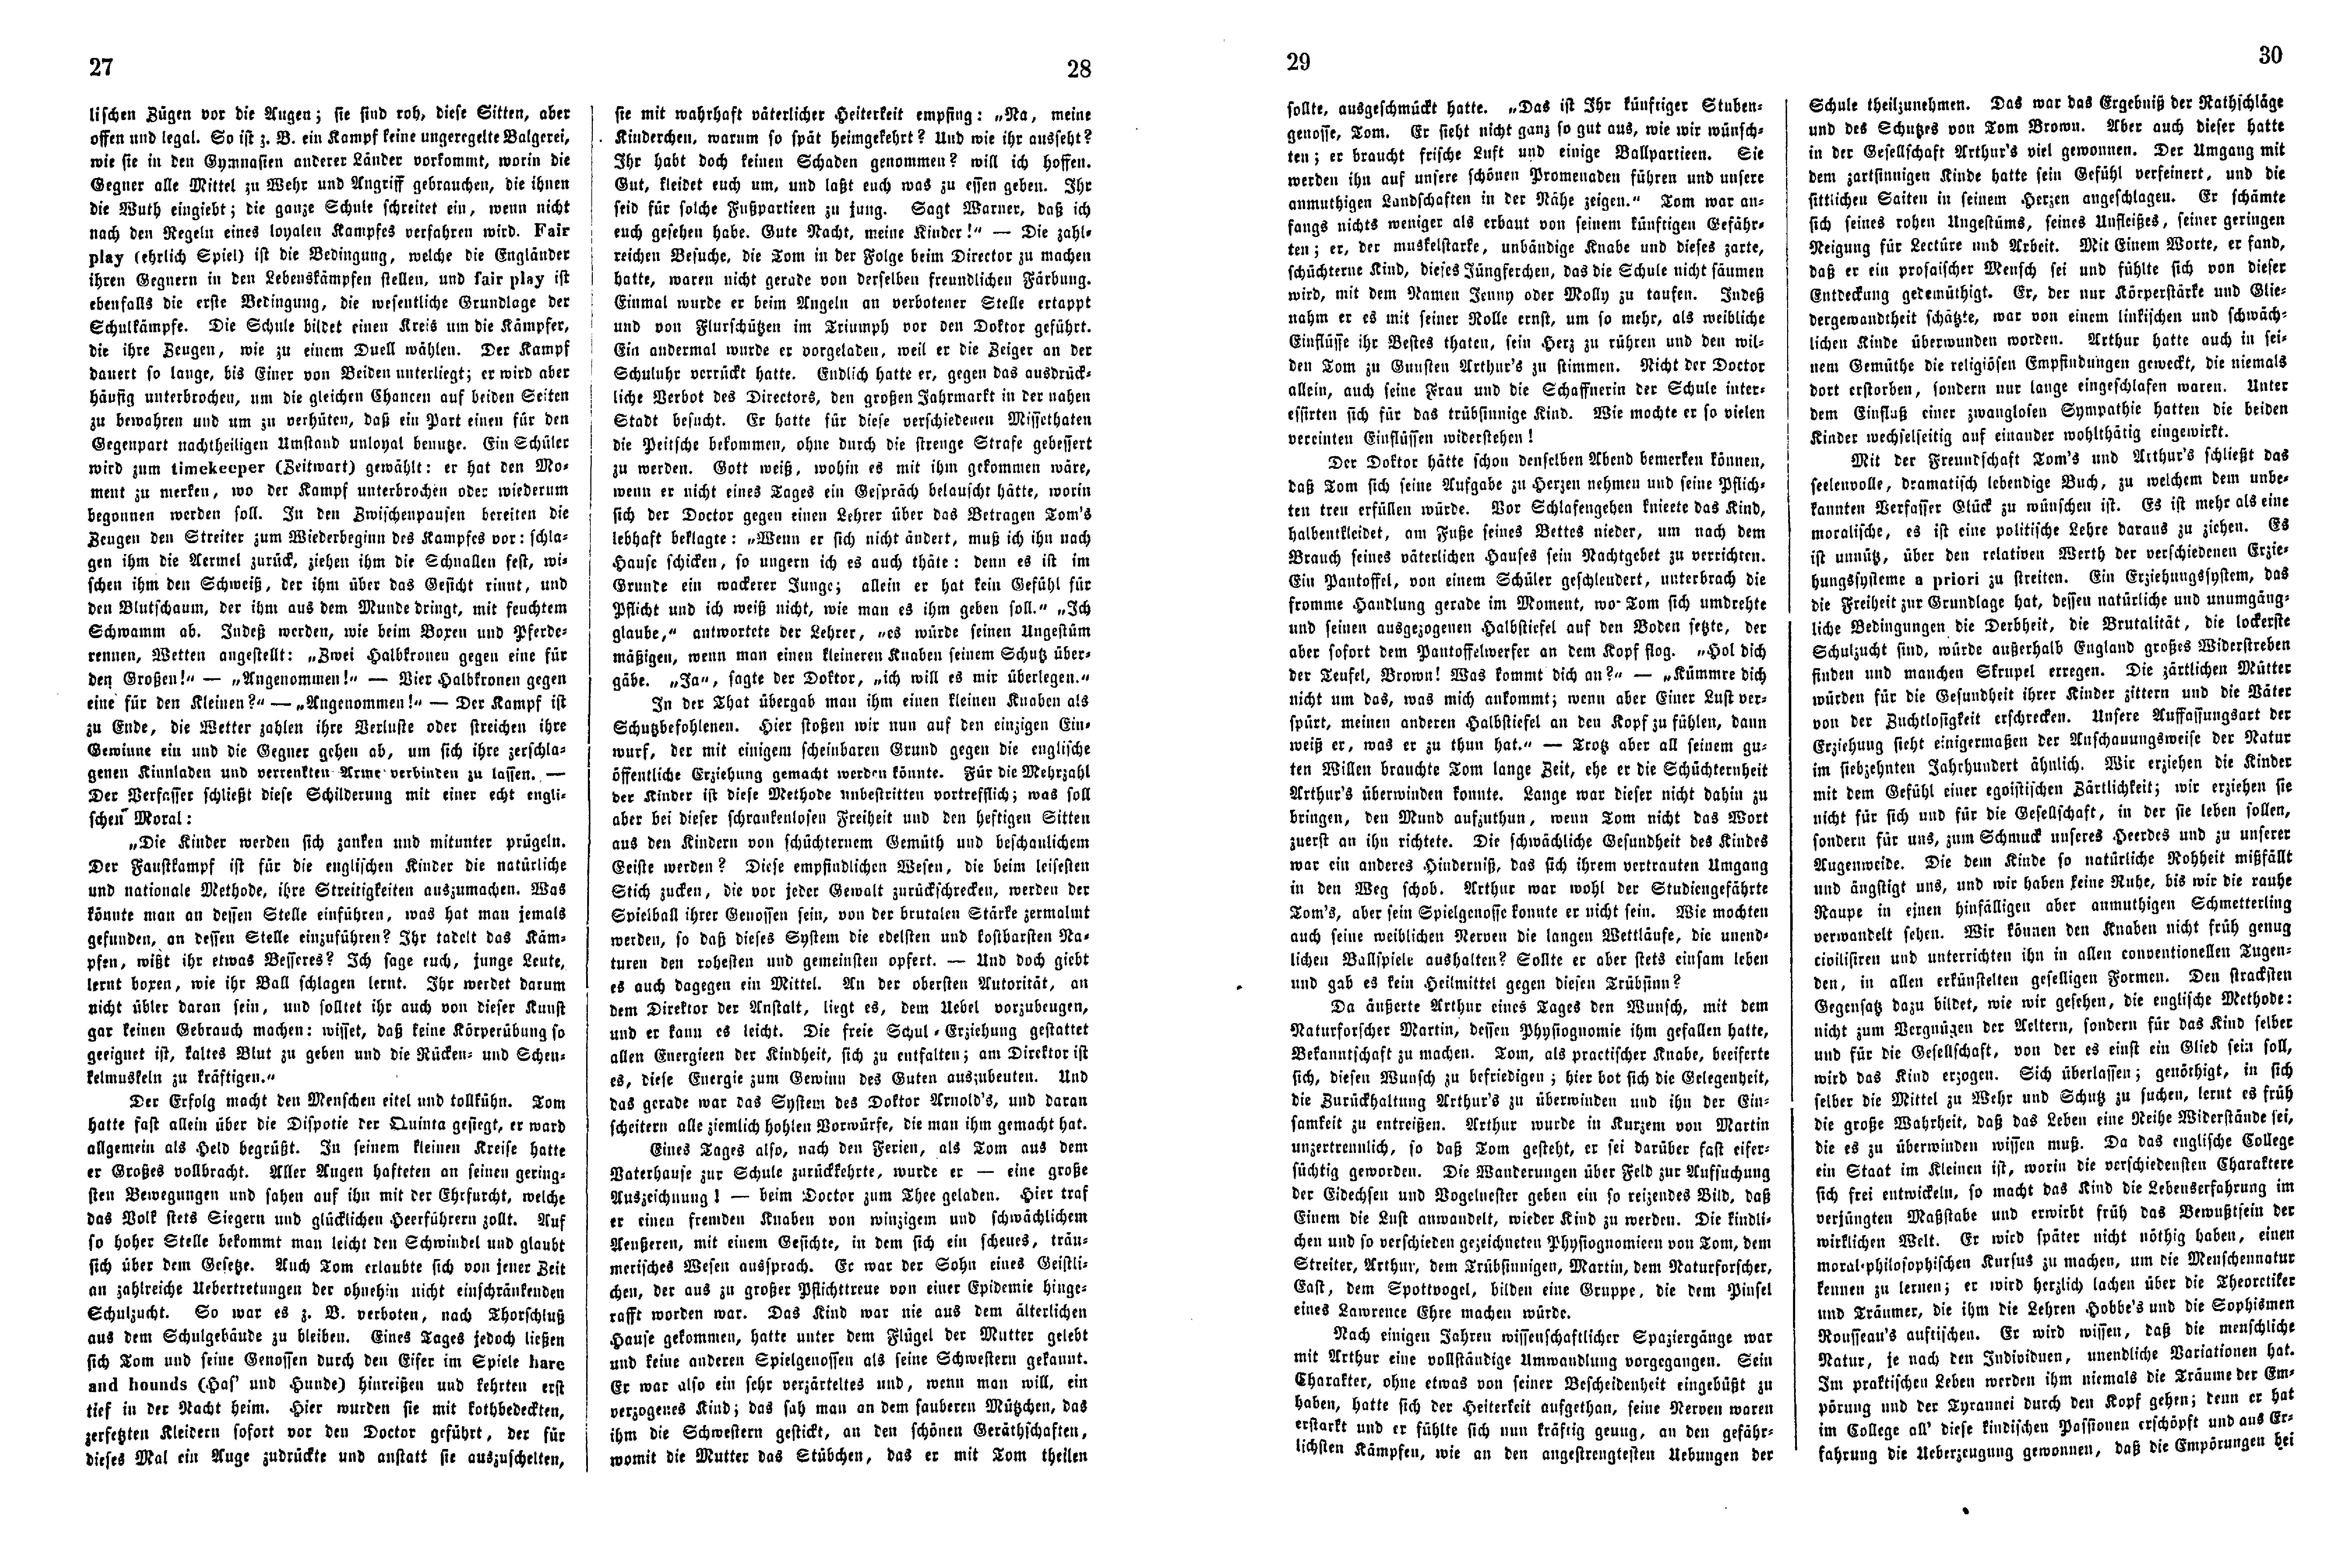 Das Inland [26] (1861) | 11. (27-30) Main body of text